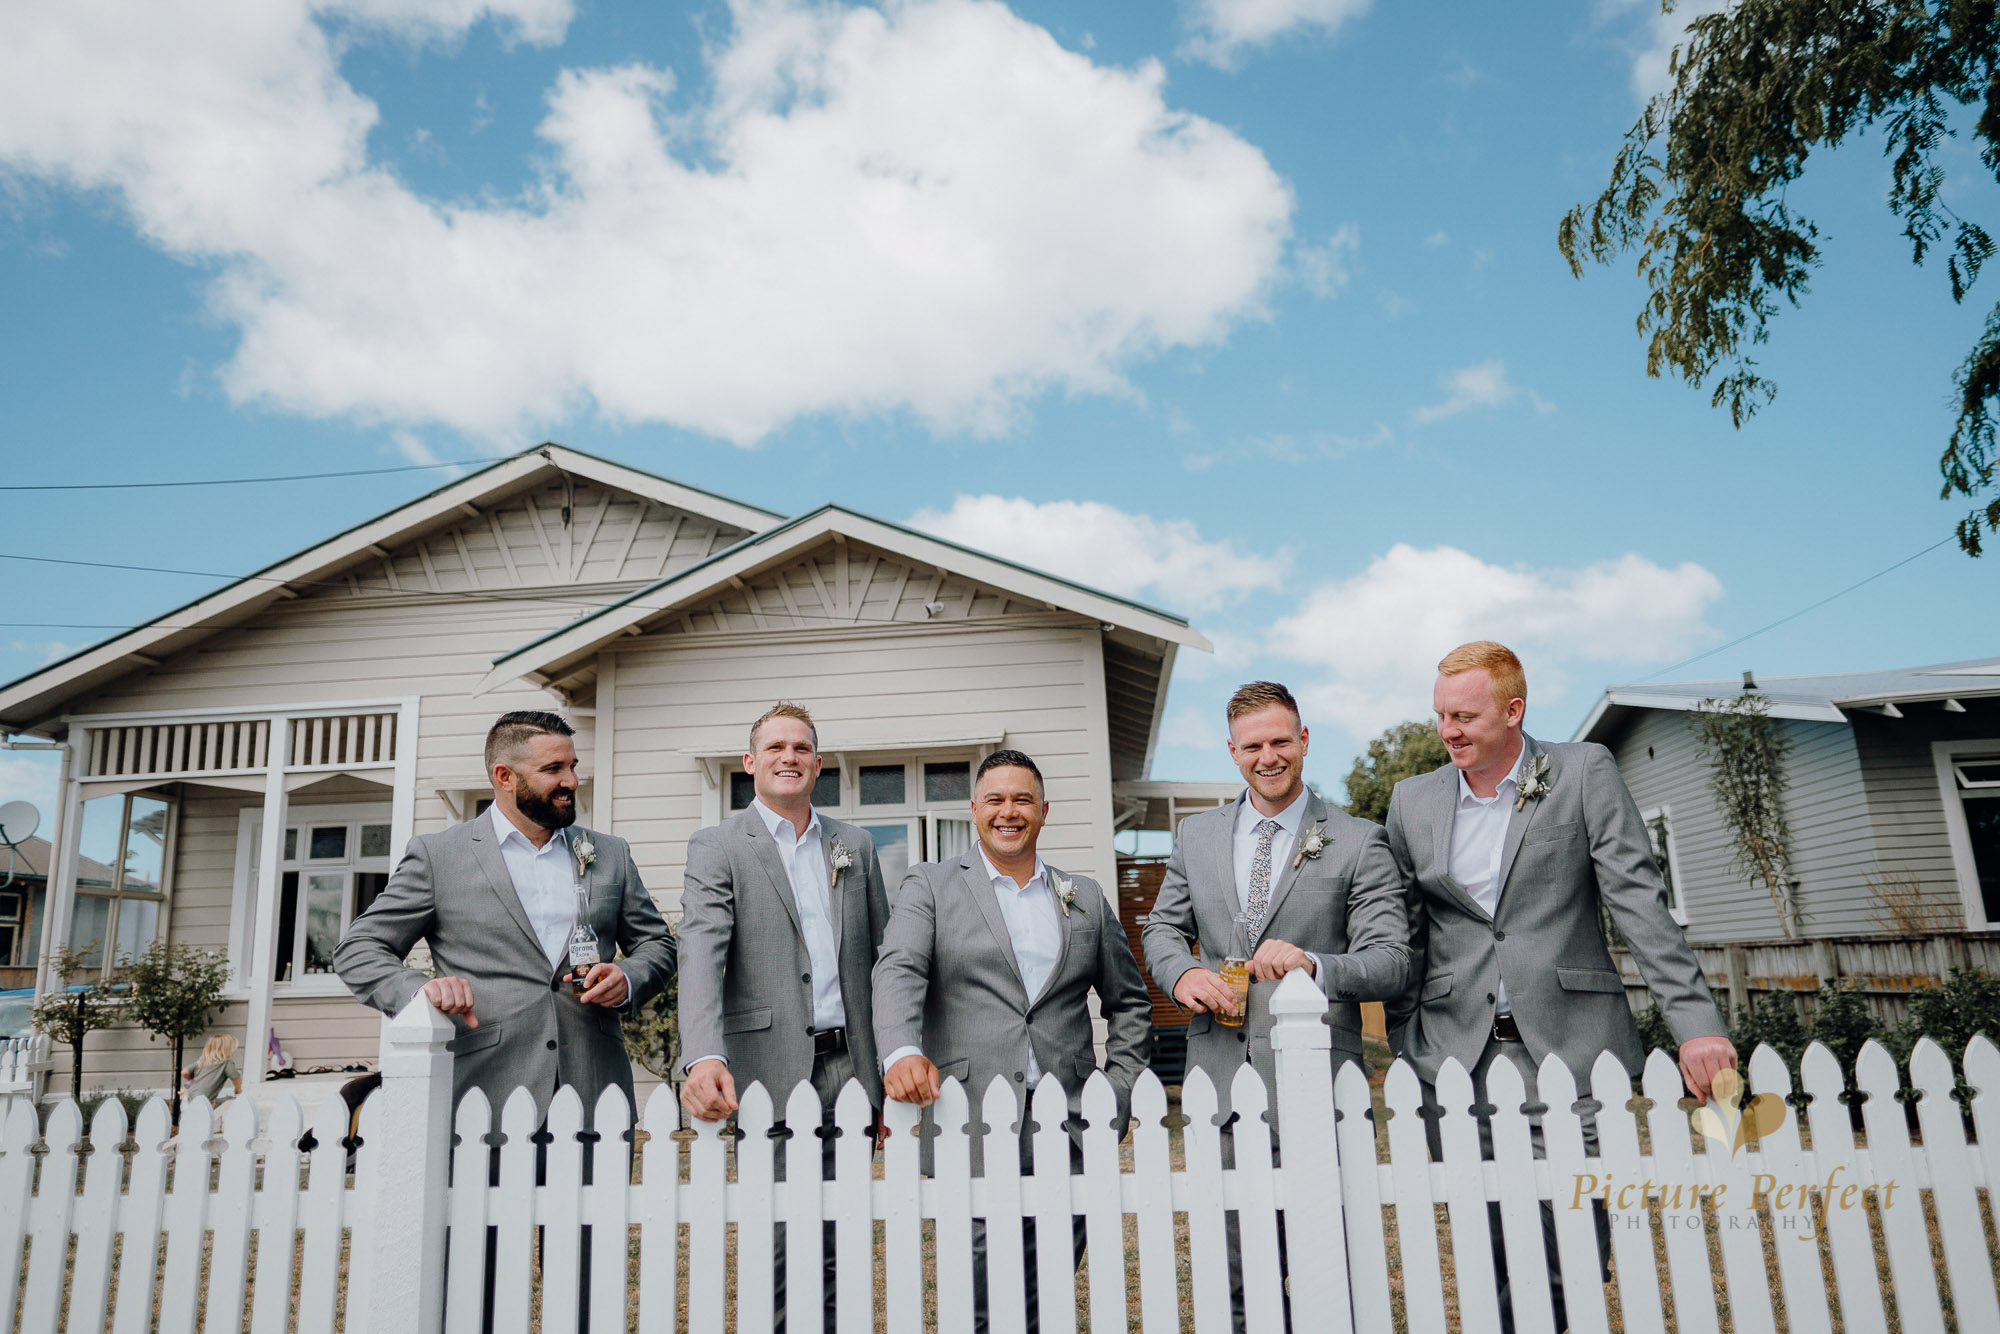 Kyle and boys posing for their Whanganui wedding photo outside his home